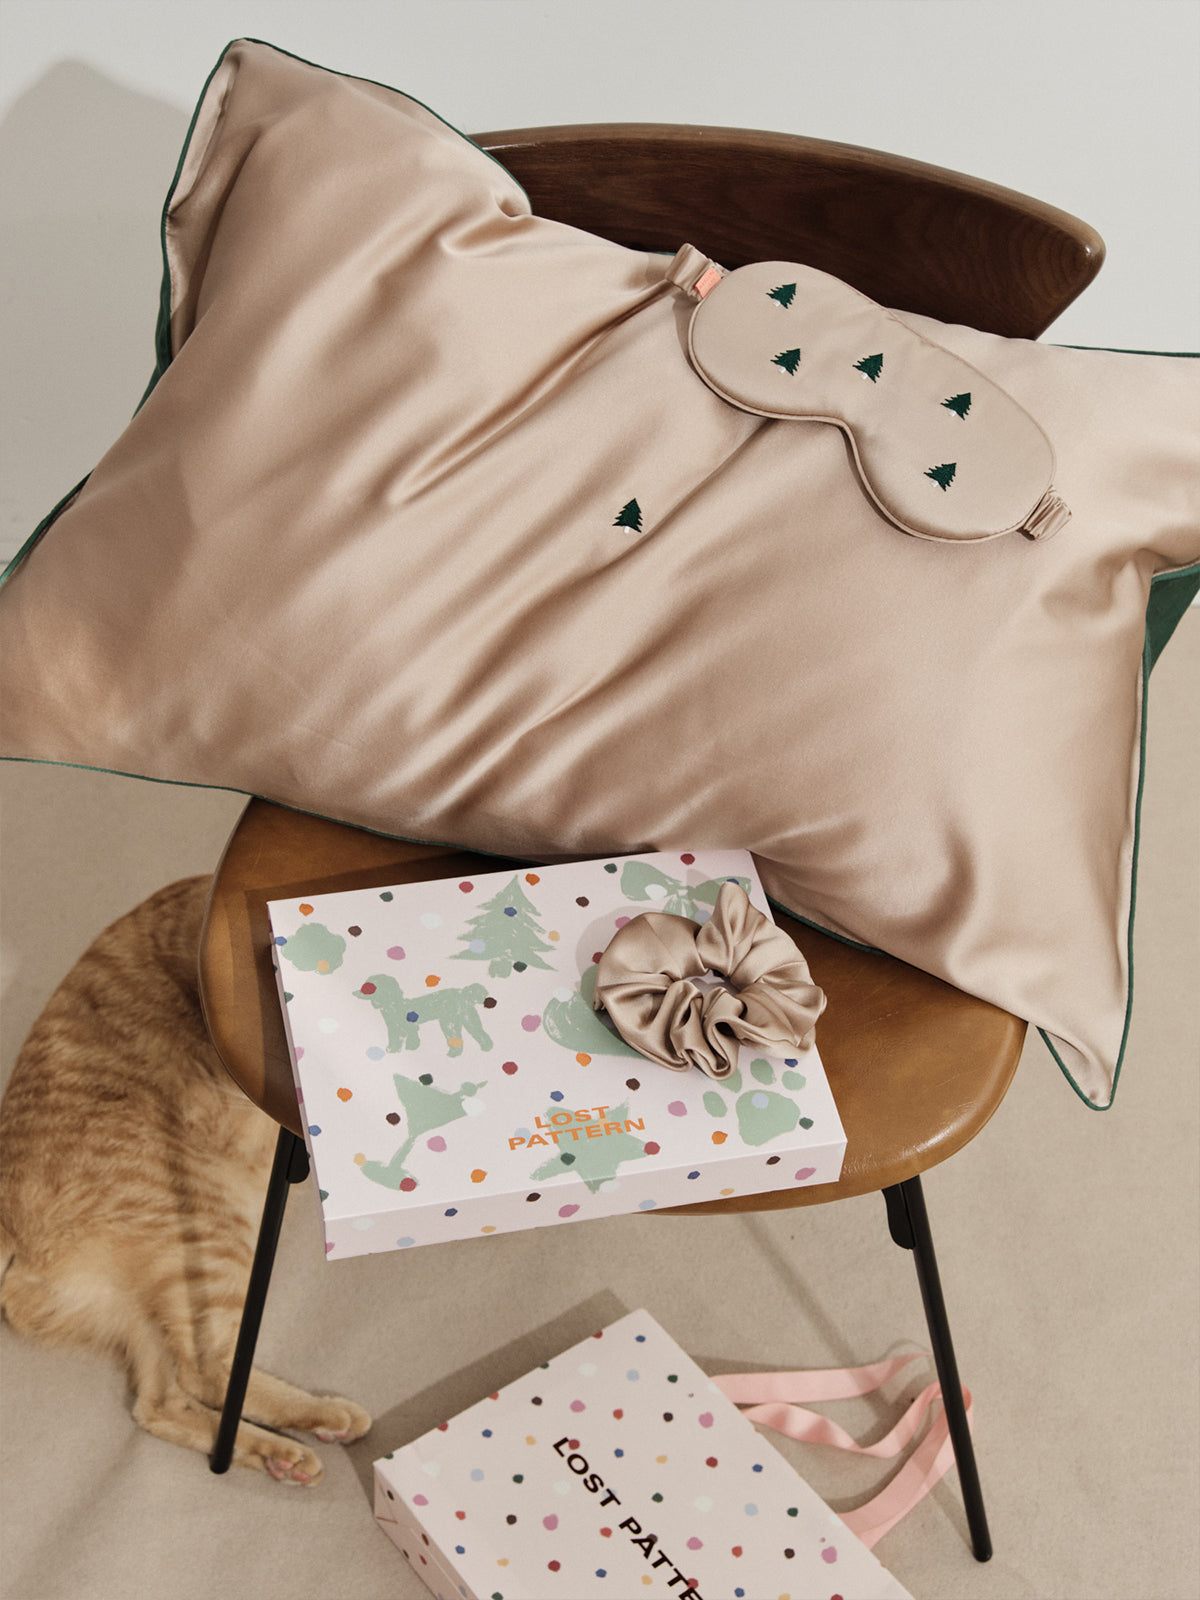 "Evergreen" 3 Piece Silk Gift Set - Silk Pillowcase & Silk Sleep Eye Mask & Silk Scrunchie